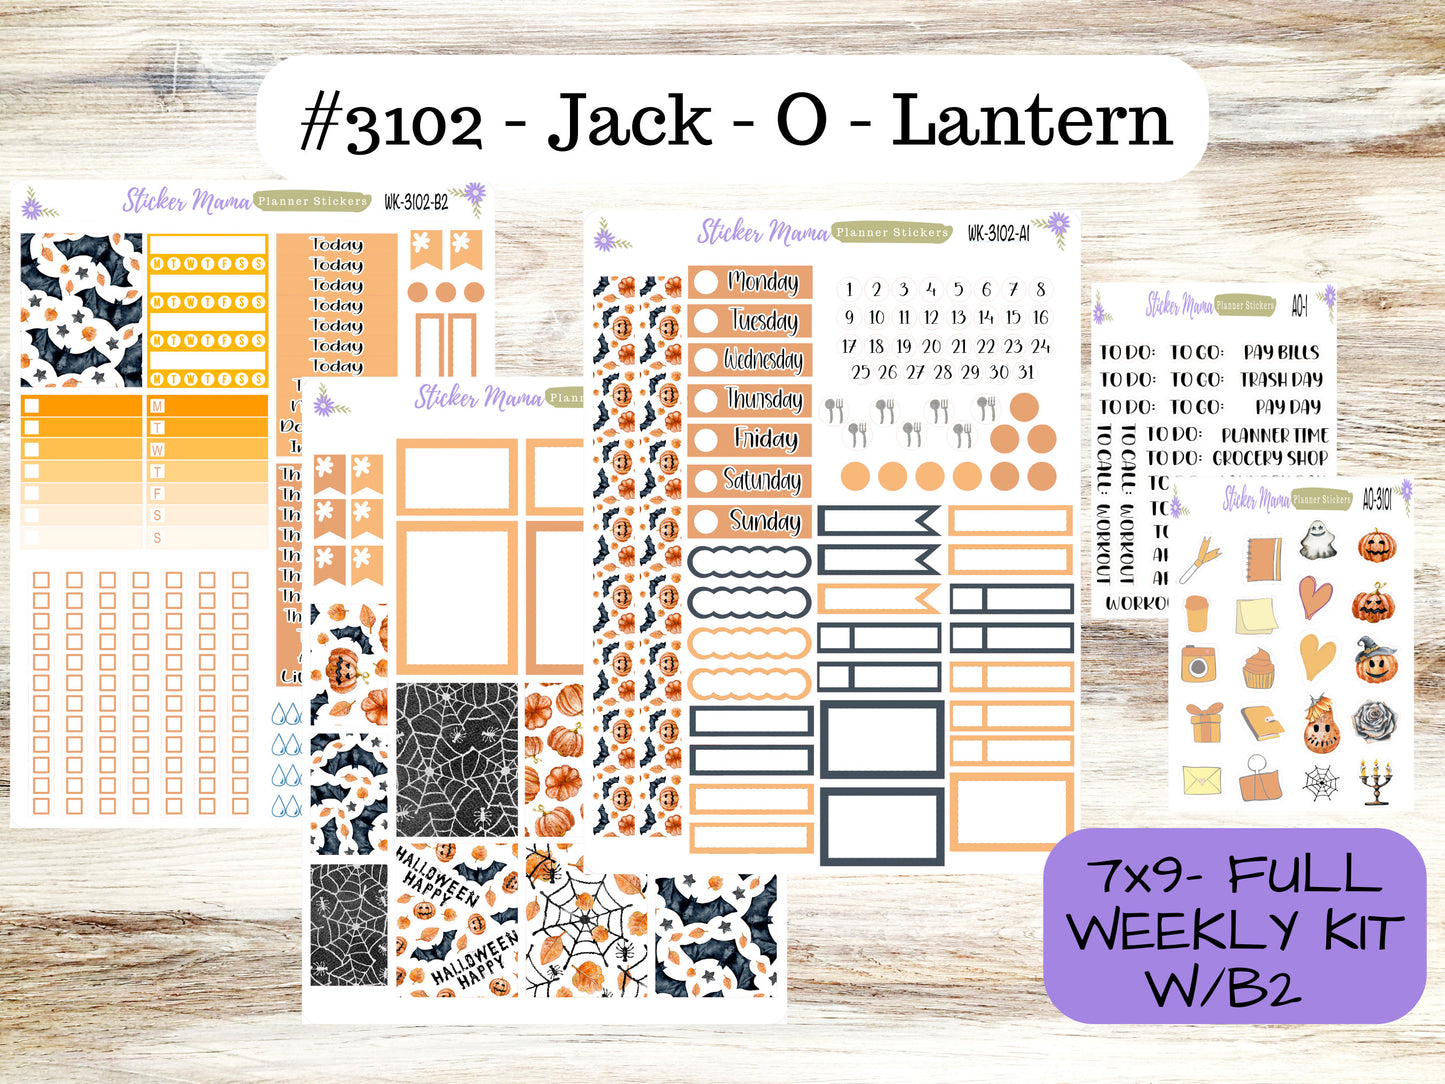 WEEKLY KIT - 3102 || Jack - O - Lantern  || Weekly Planner Kit || Erin Condren || Hourly Planner Kit || Vertical Planner Kit